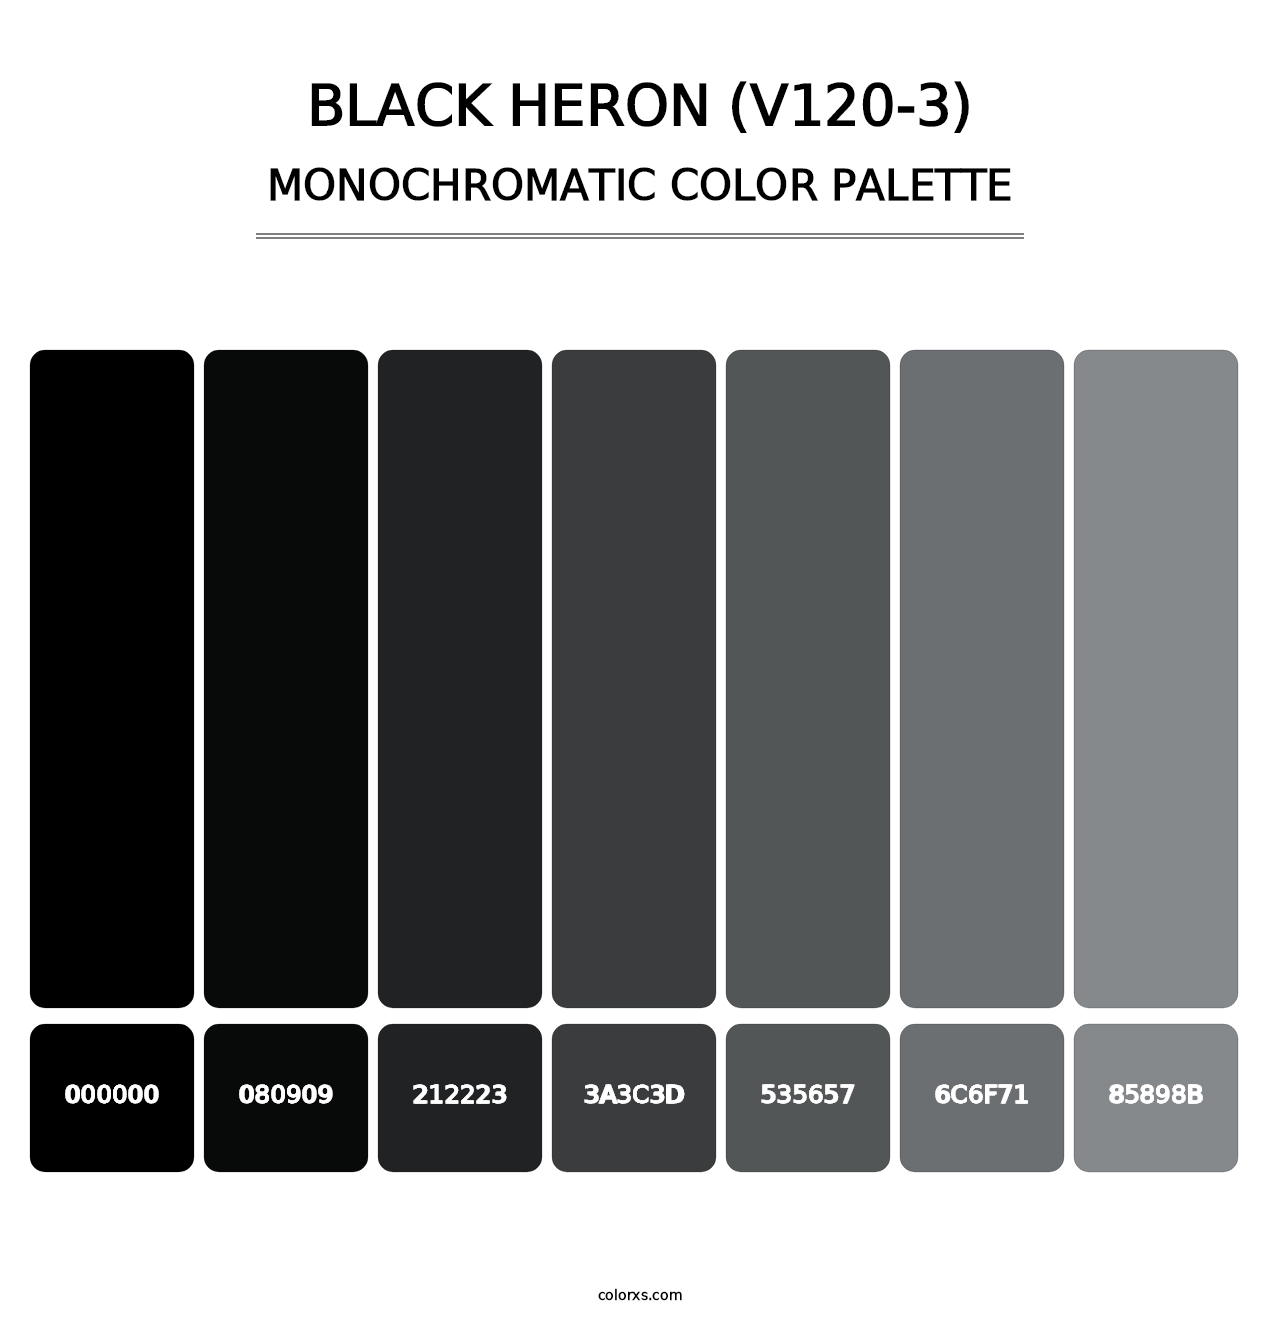 Black Heron (V120-3) - Monochromatic Color Palette